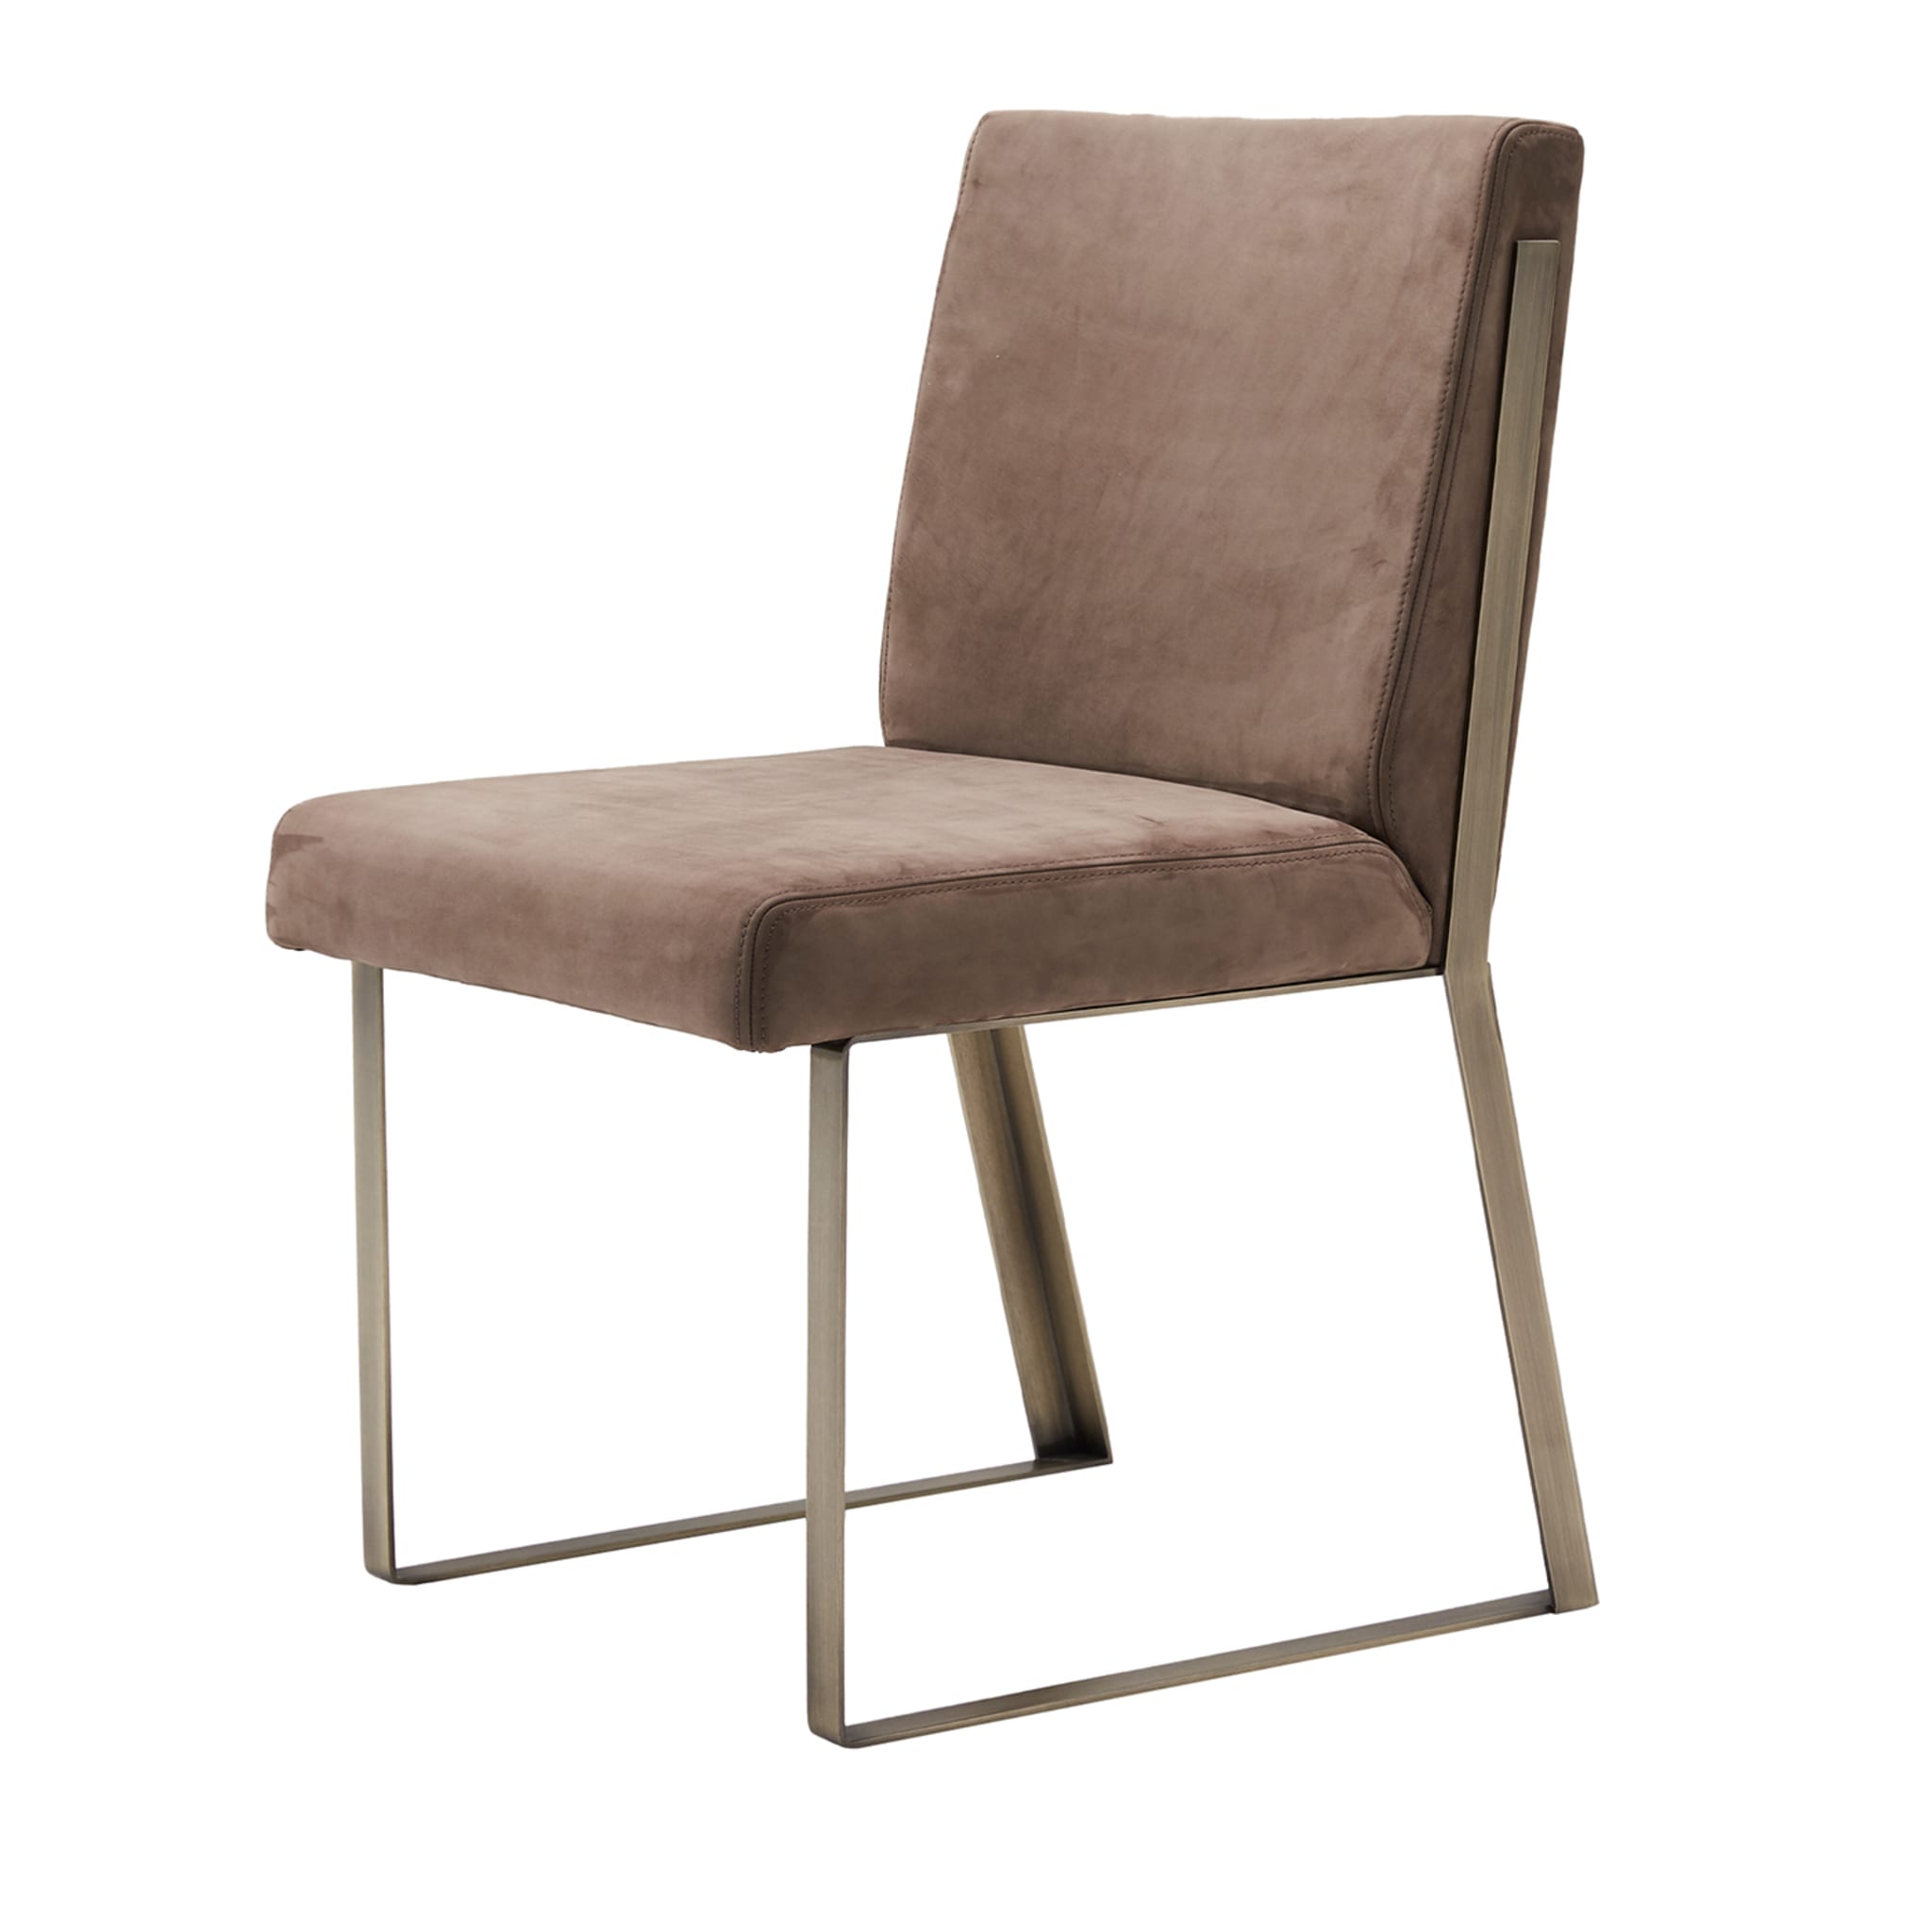 Palio Brown & Bronze Chair - Main view